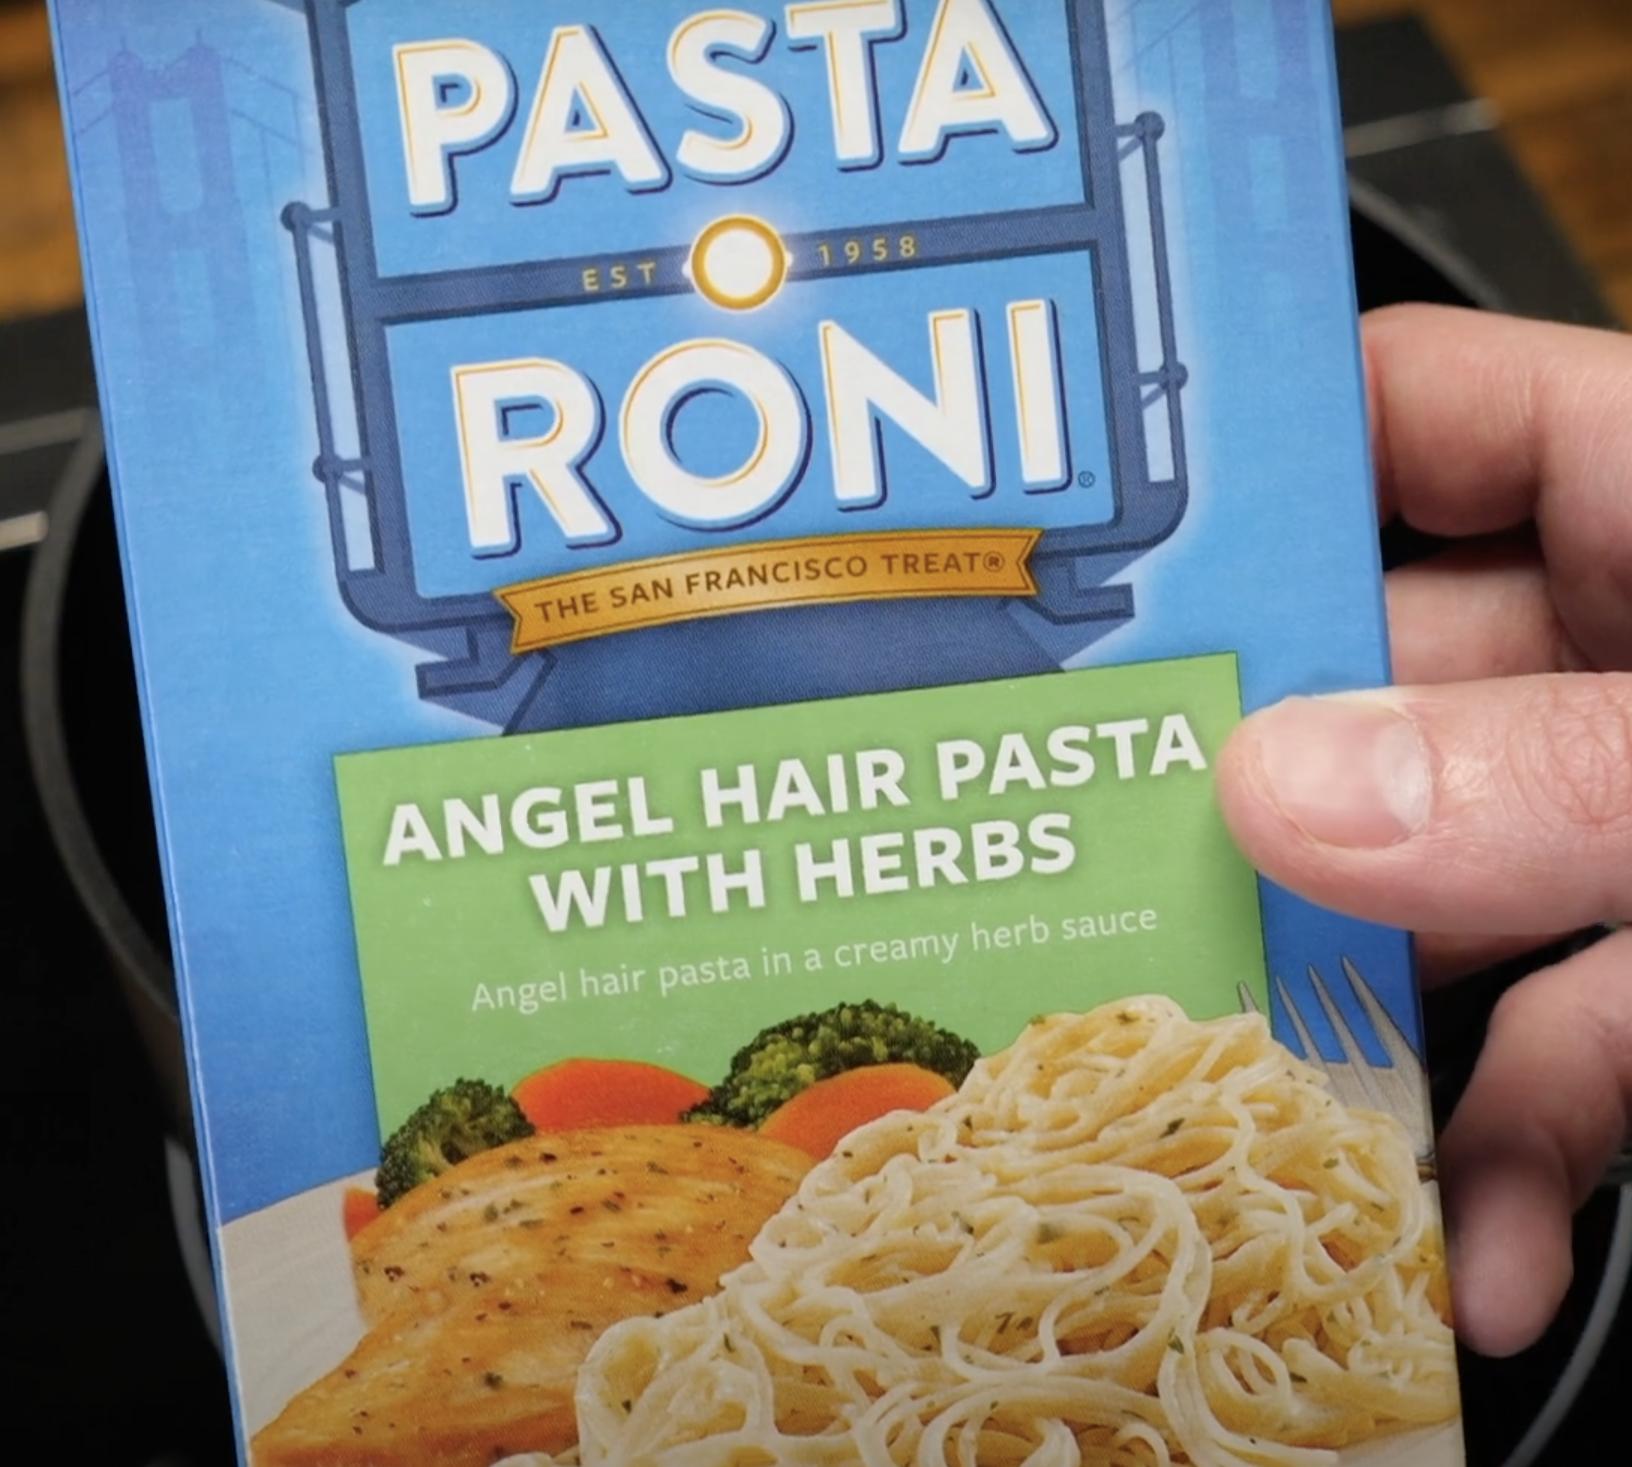 A hand holding Pasta Roni box.